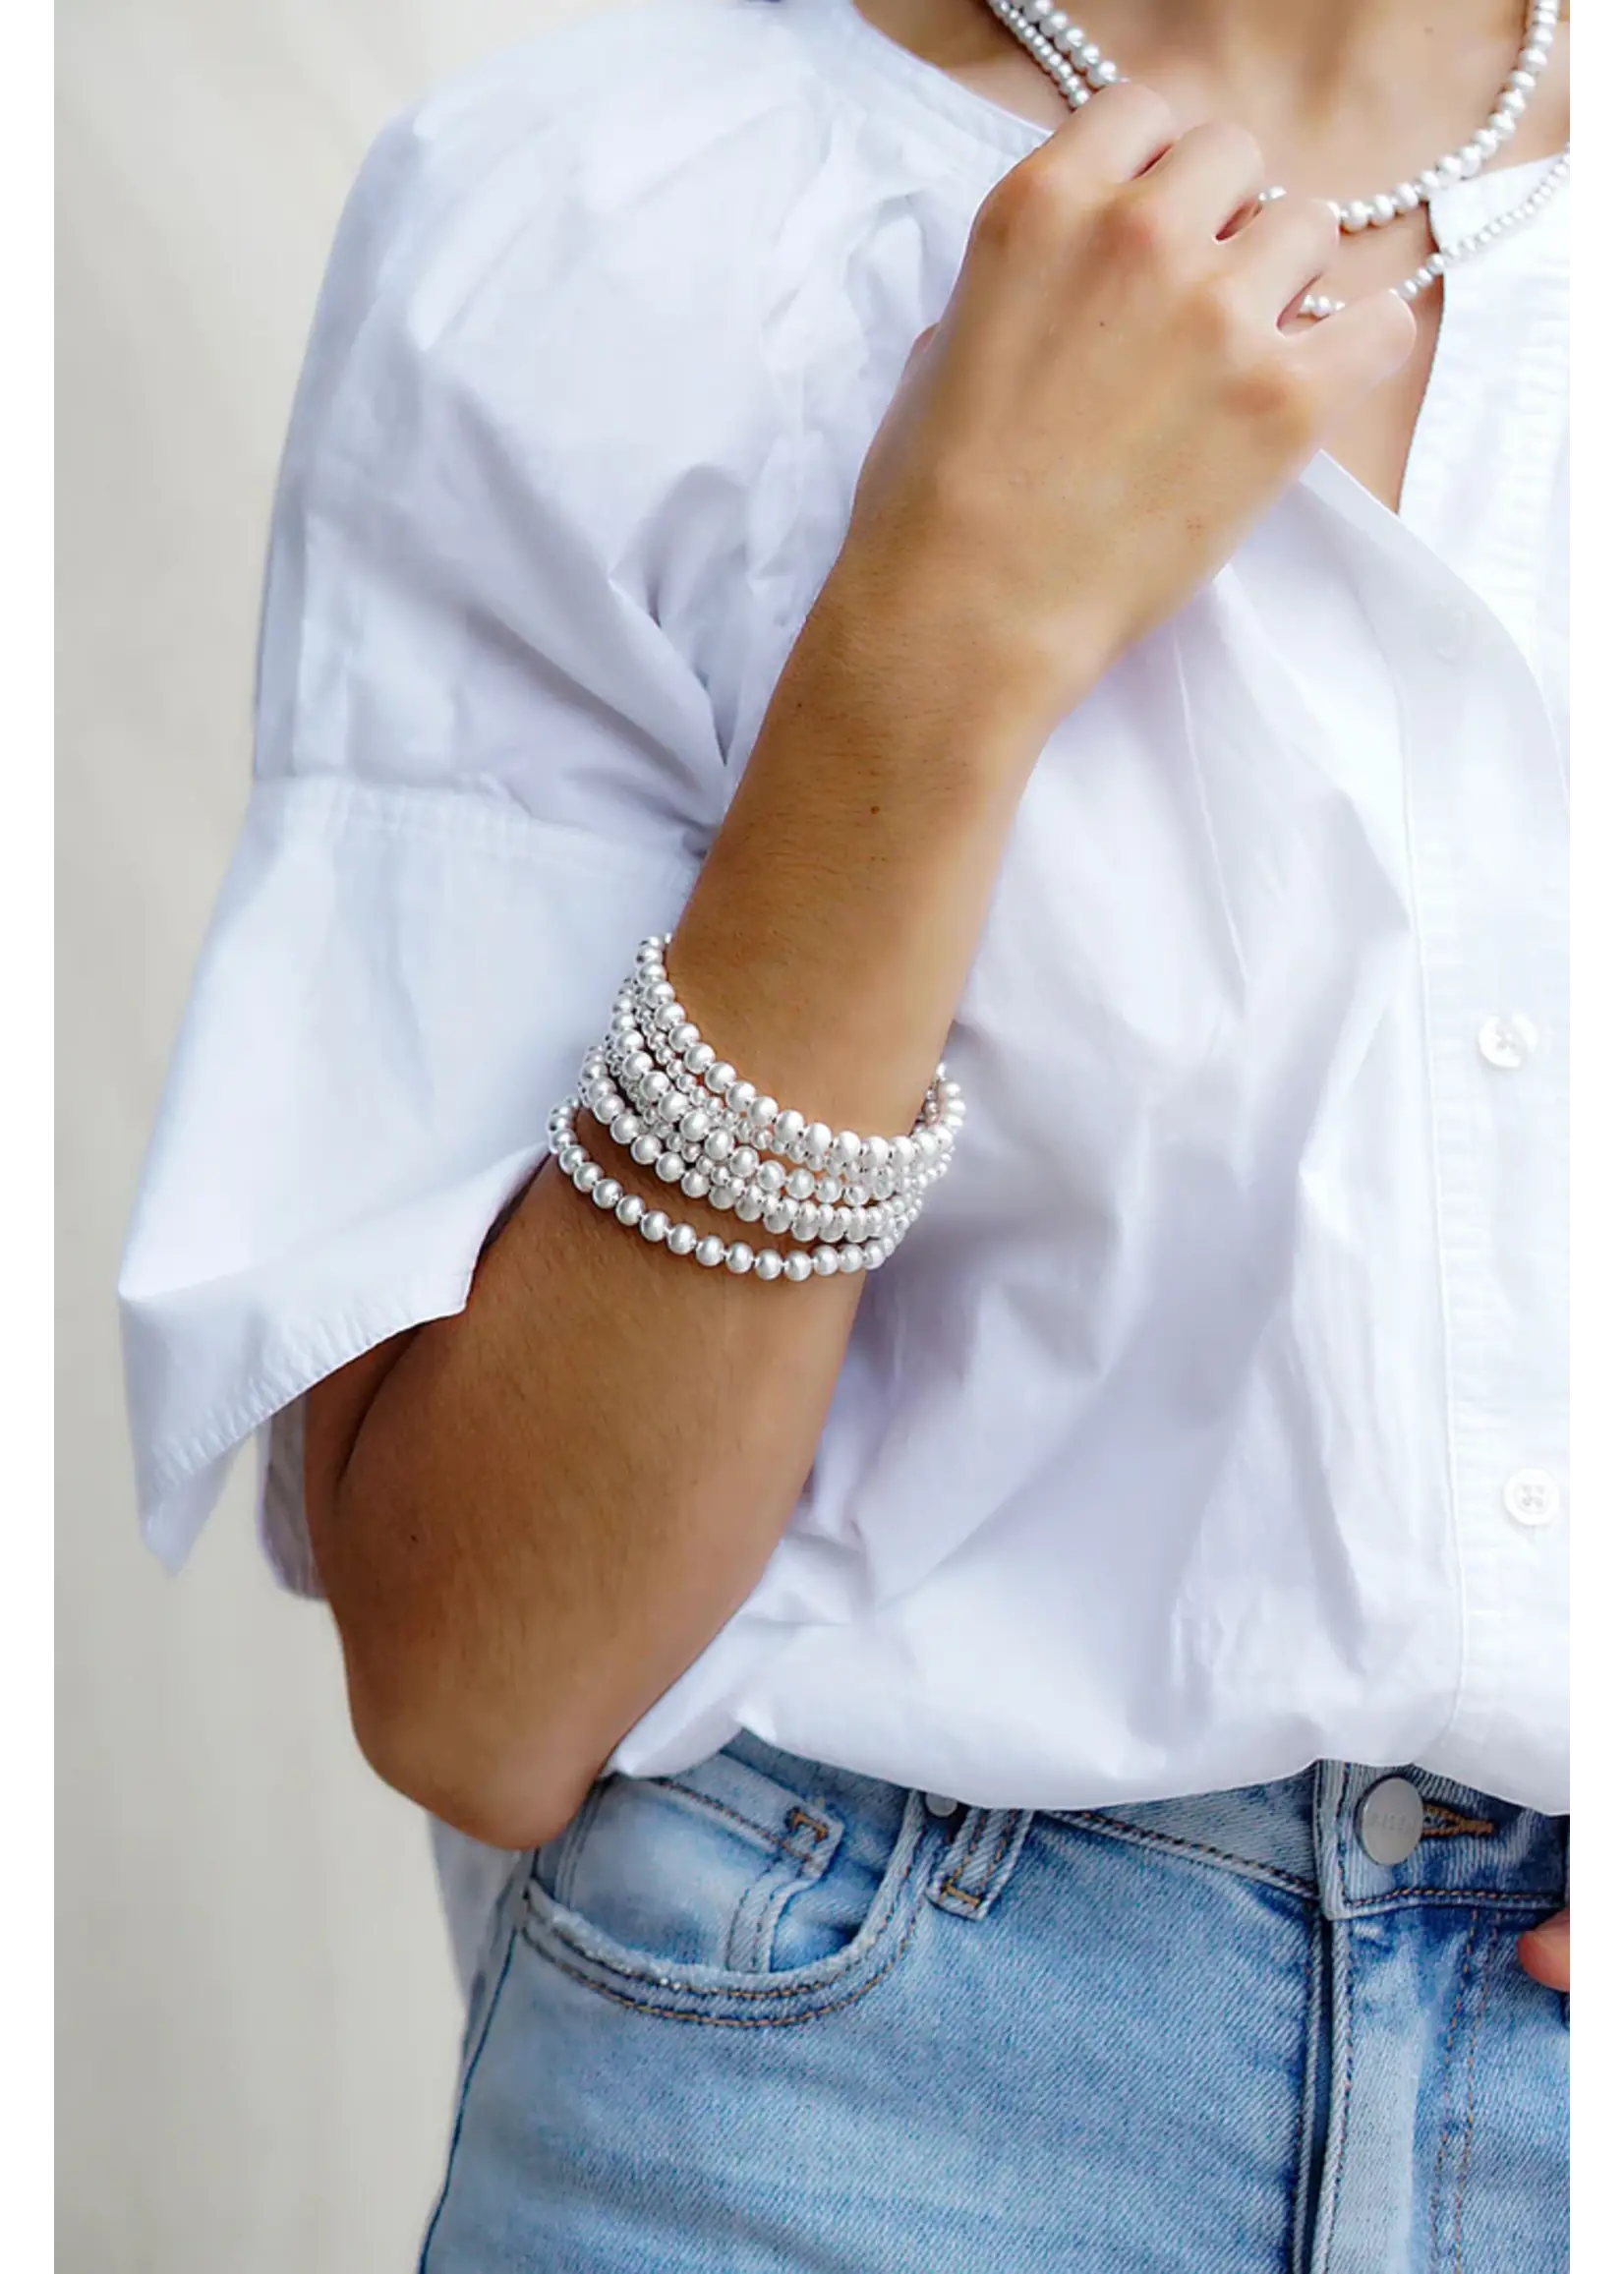 Canvas Cypress Ball Bead Stretch Bracelets (Set of 2) - Silver